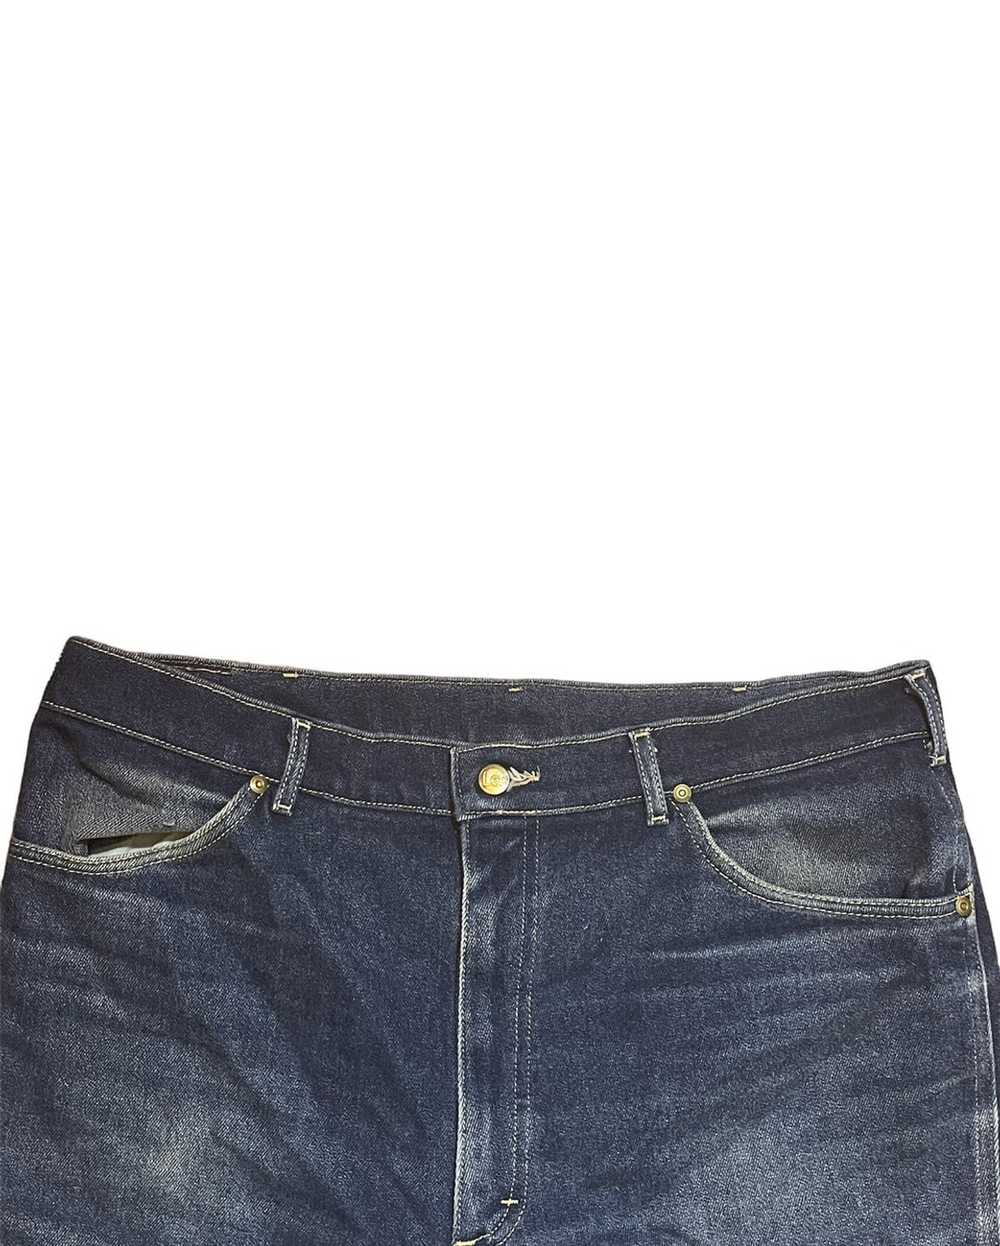 Lee × Vintage 1980s Lee denim jeans. - image 3